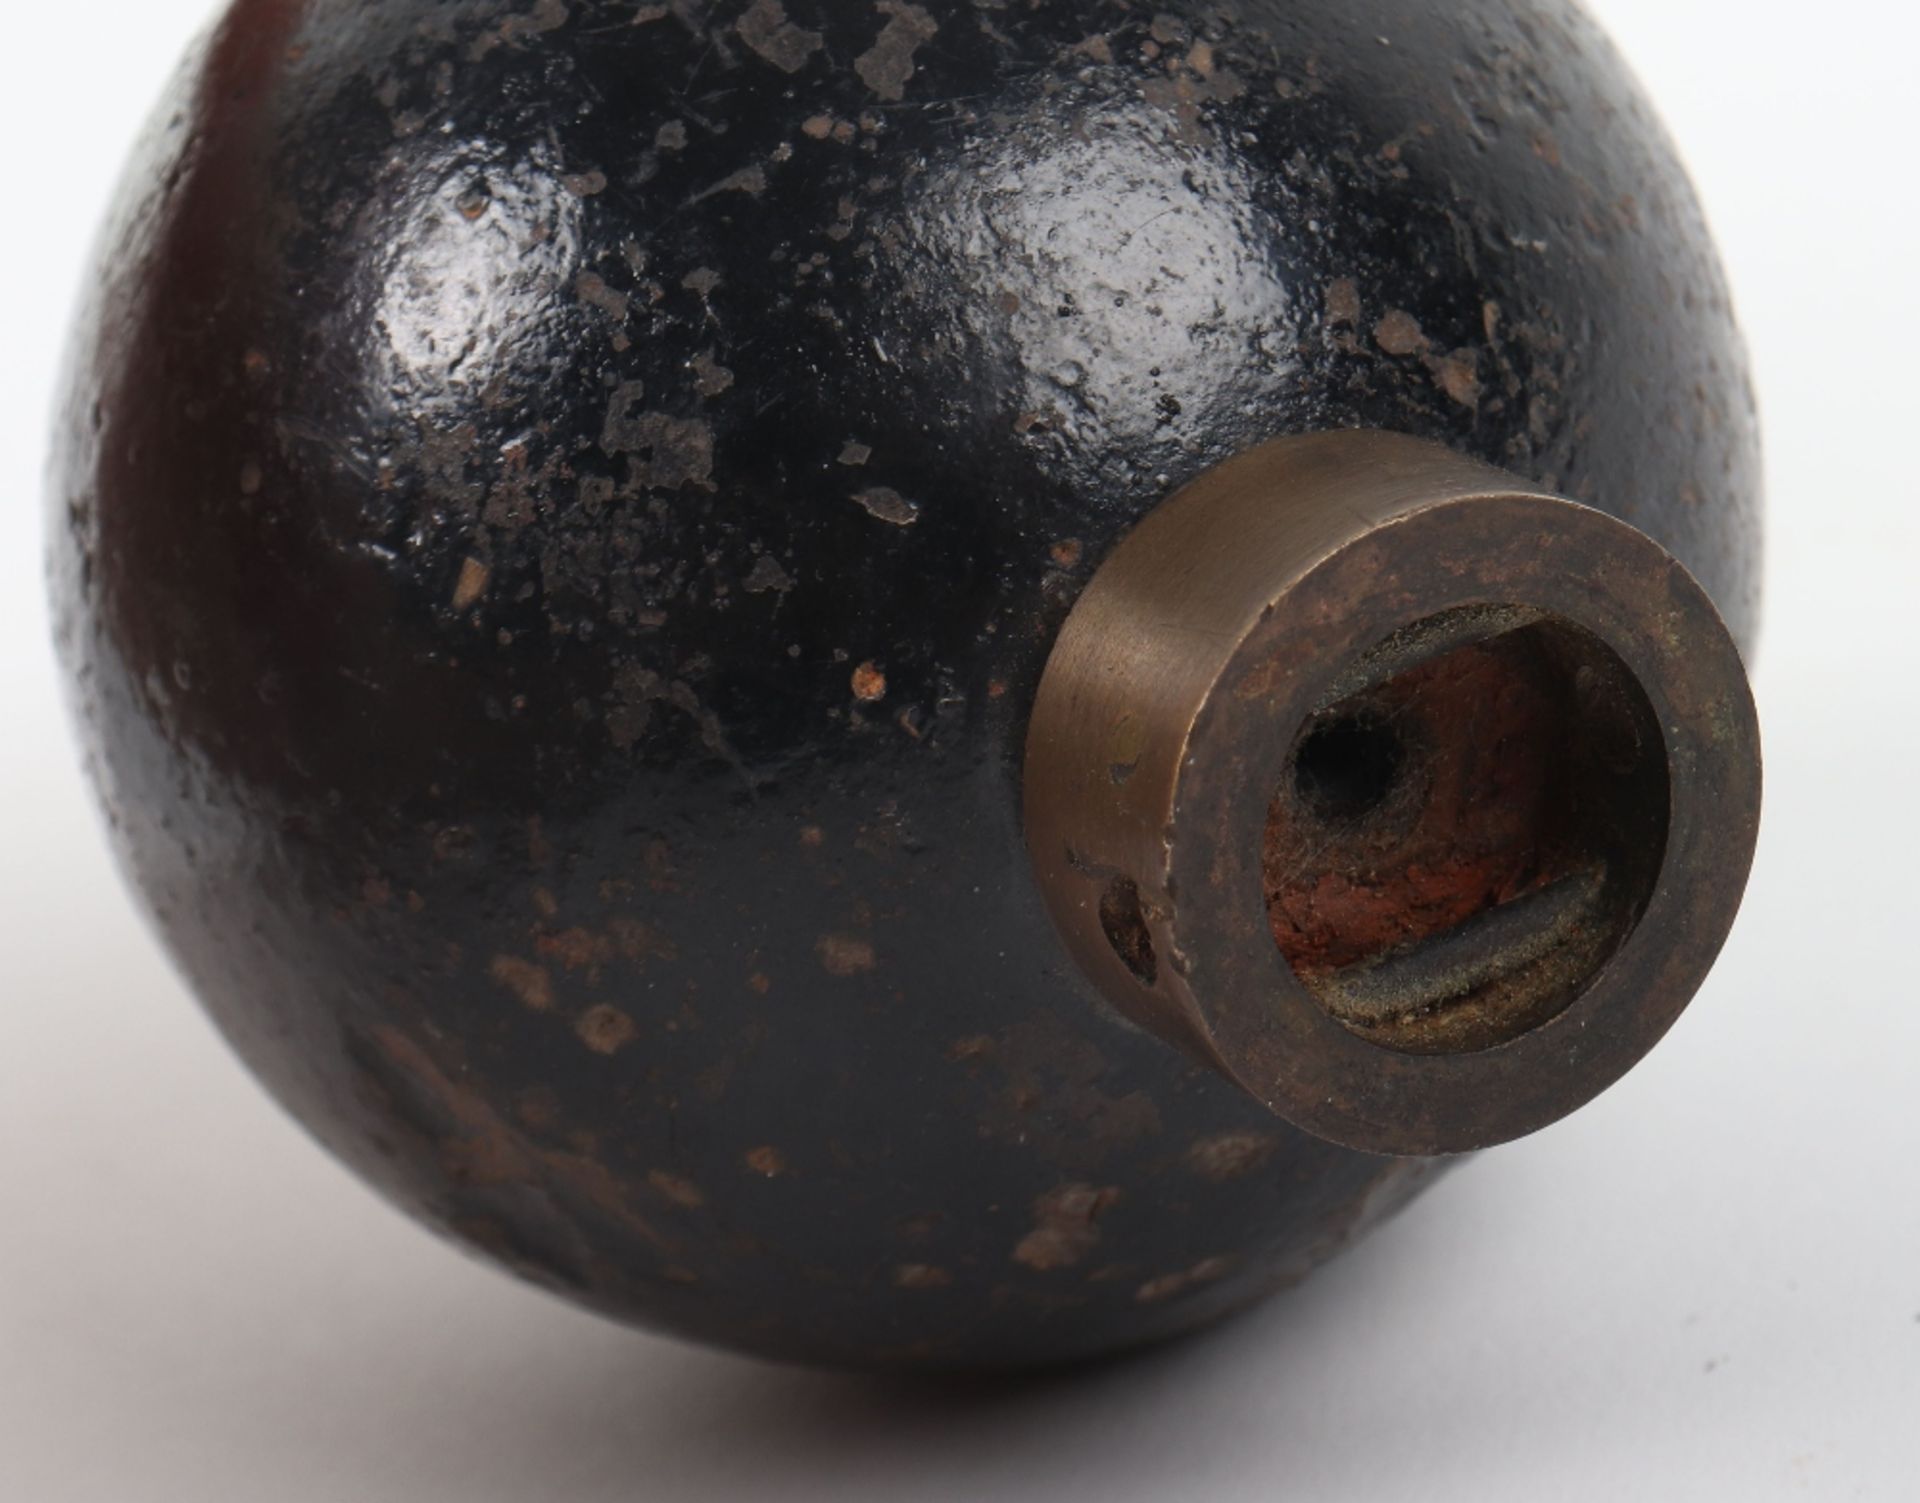 Inert French WW1 Ball Grenade - Image 4 of 4